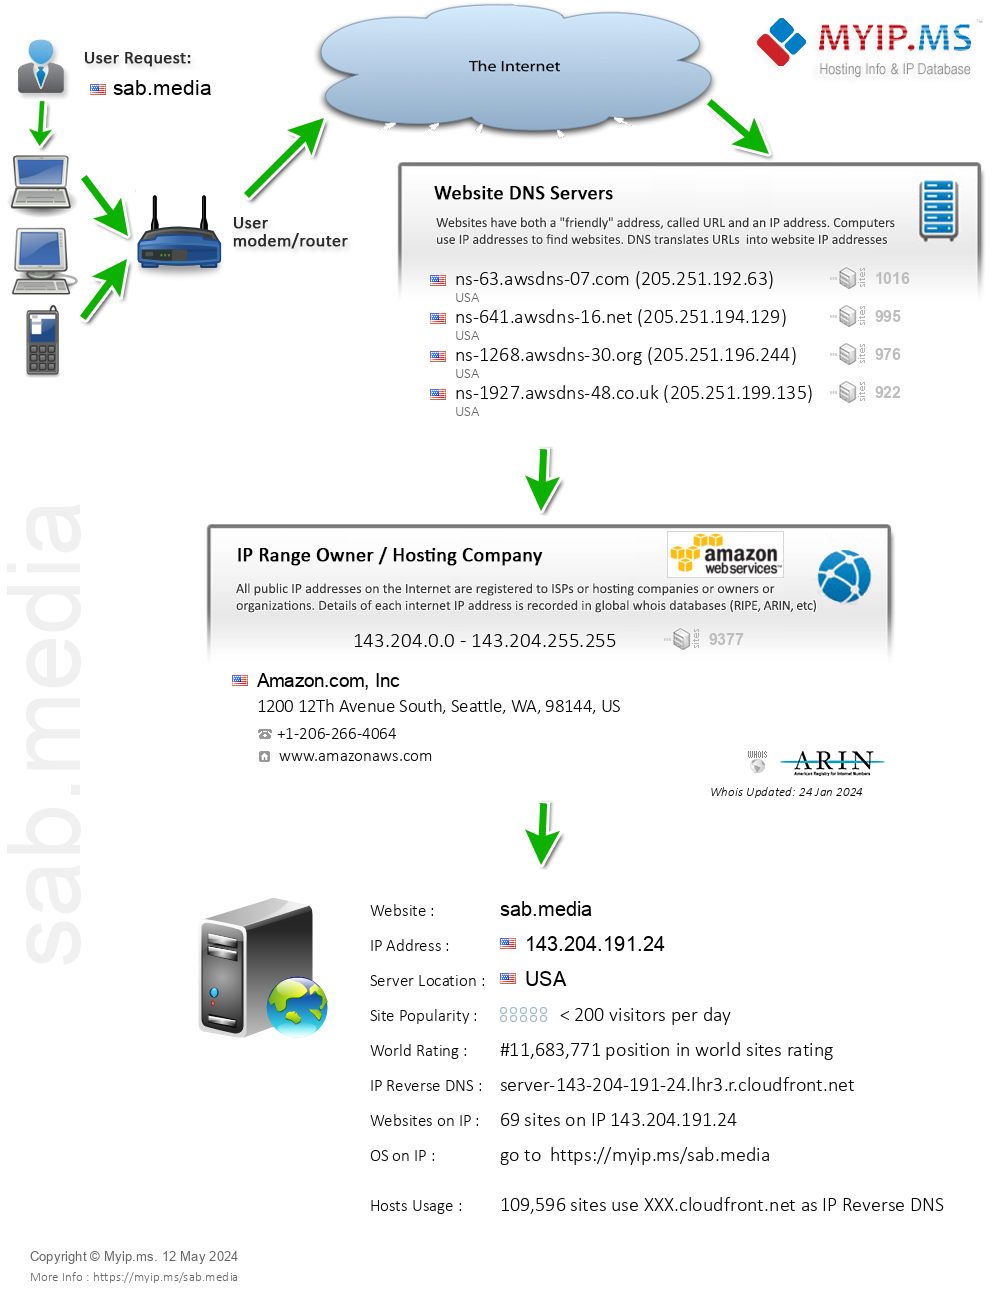 Sab.media - Website Hosting Visual IP Diagram